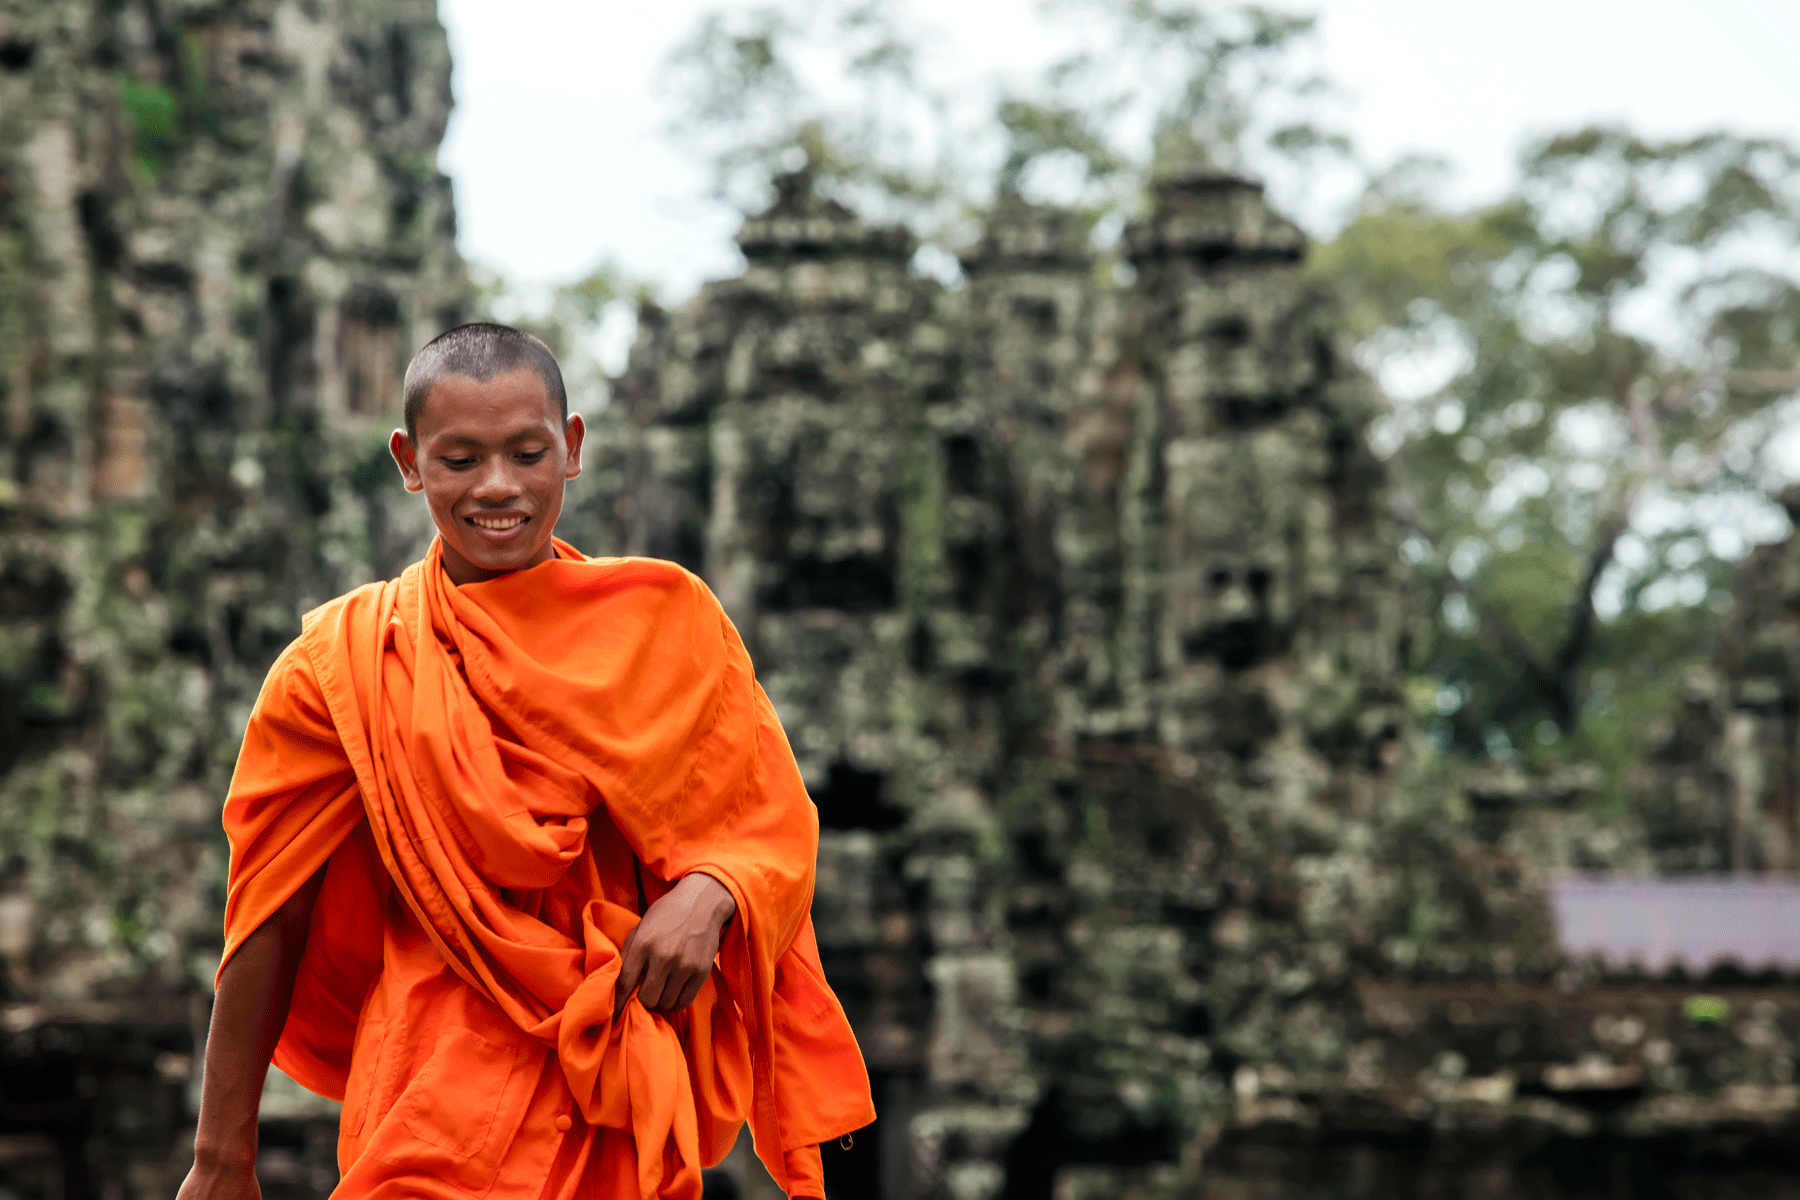 angkor-archeological-site-cambodia-monk